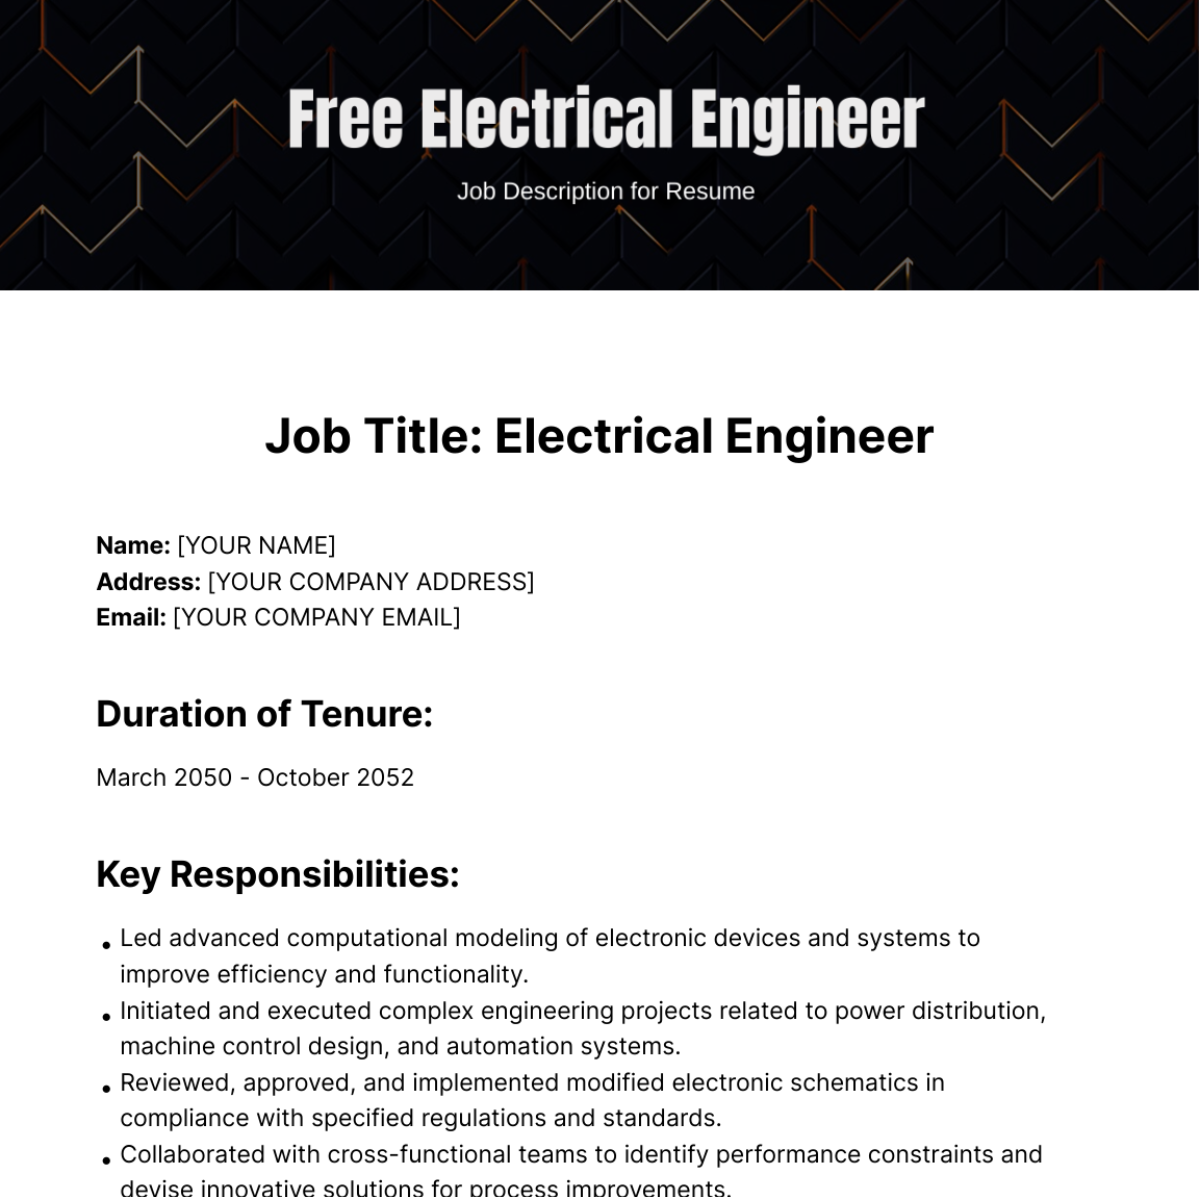 Electrical Engineer Job Description for Resume Template